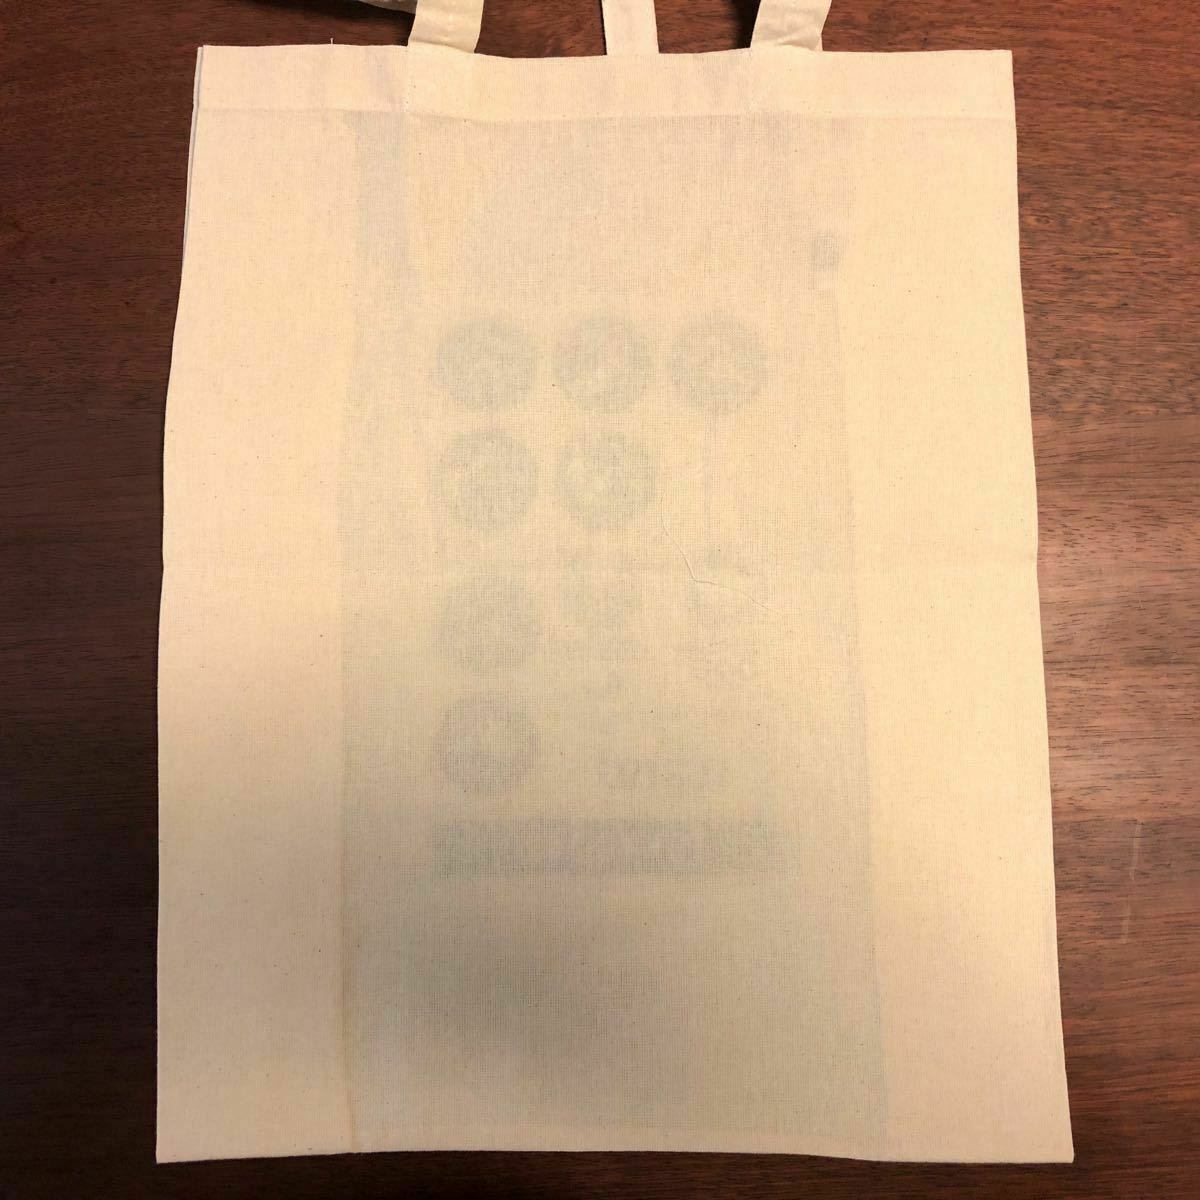 Tokyo Olympics And Paralympics Tote Bag